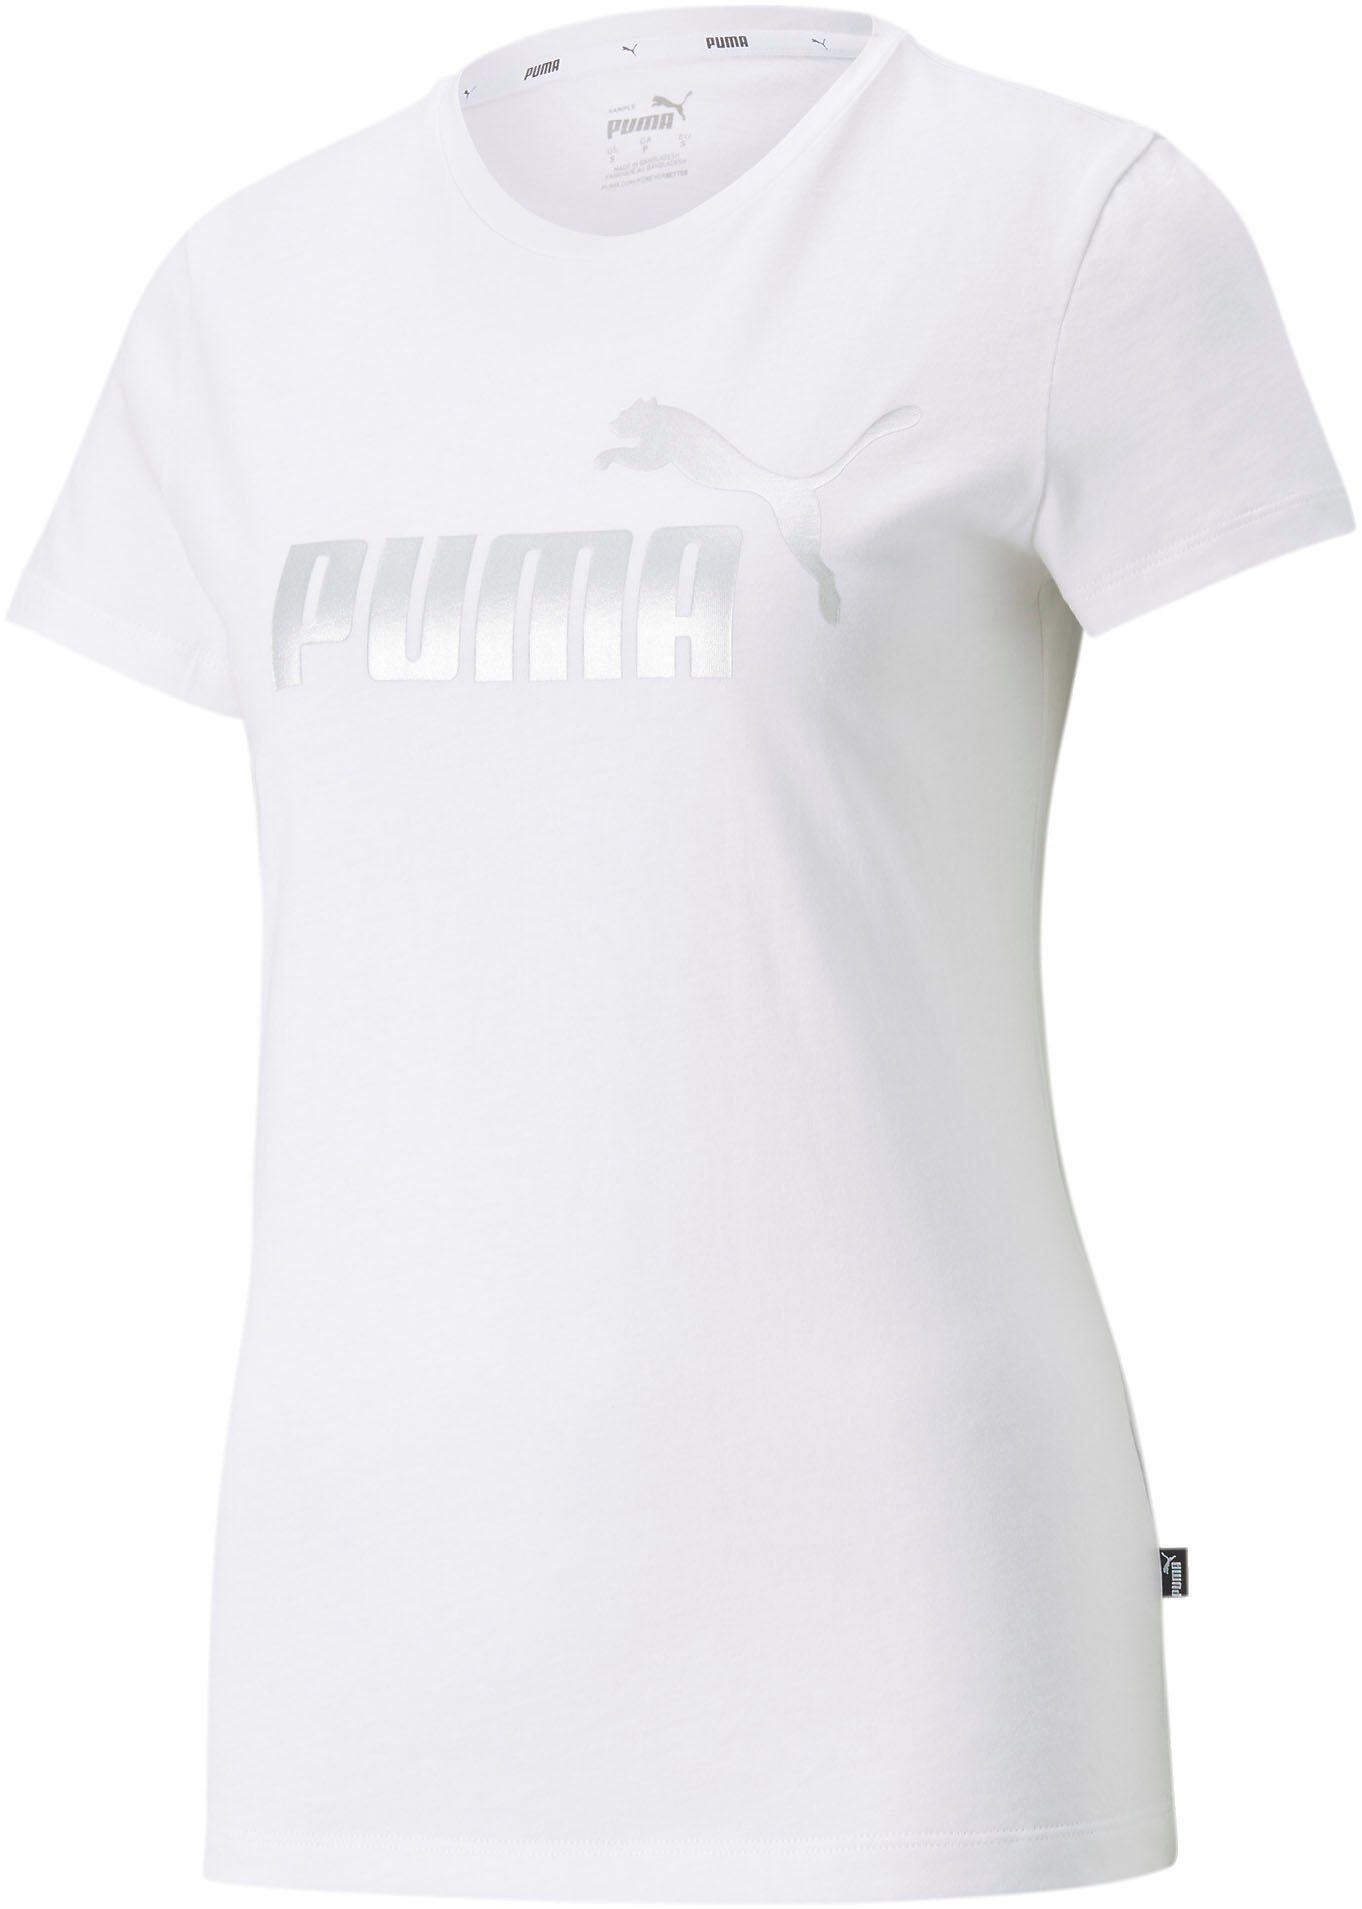 PUMA METALLIC Puma metallic White-silver LOGO ESS+ T-Shirt TEE